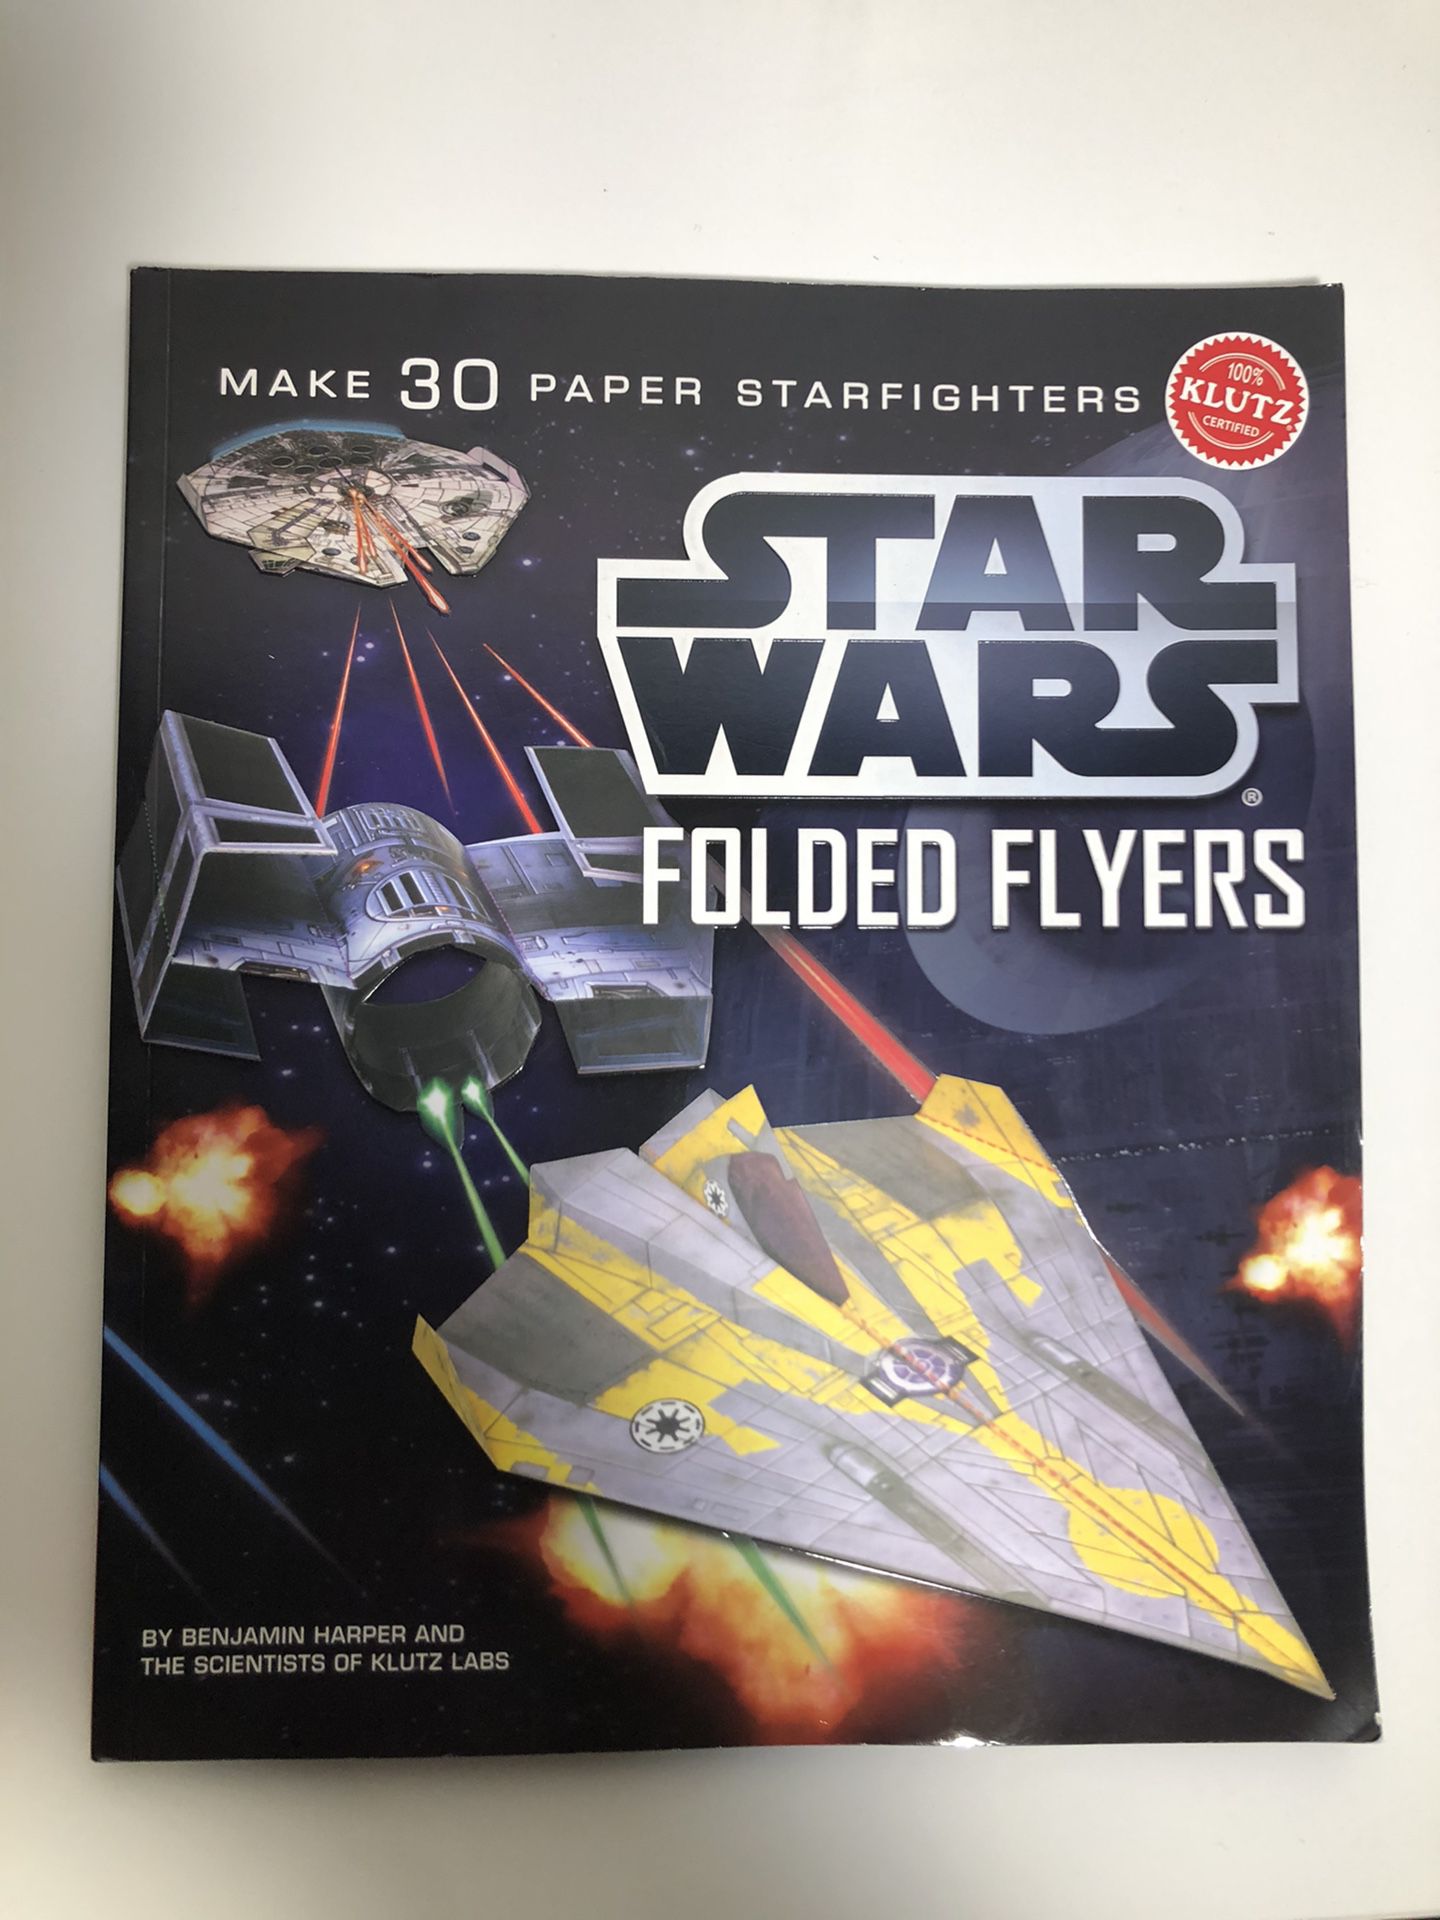 Star Wars folded flyers book